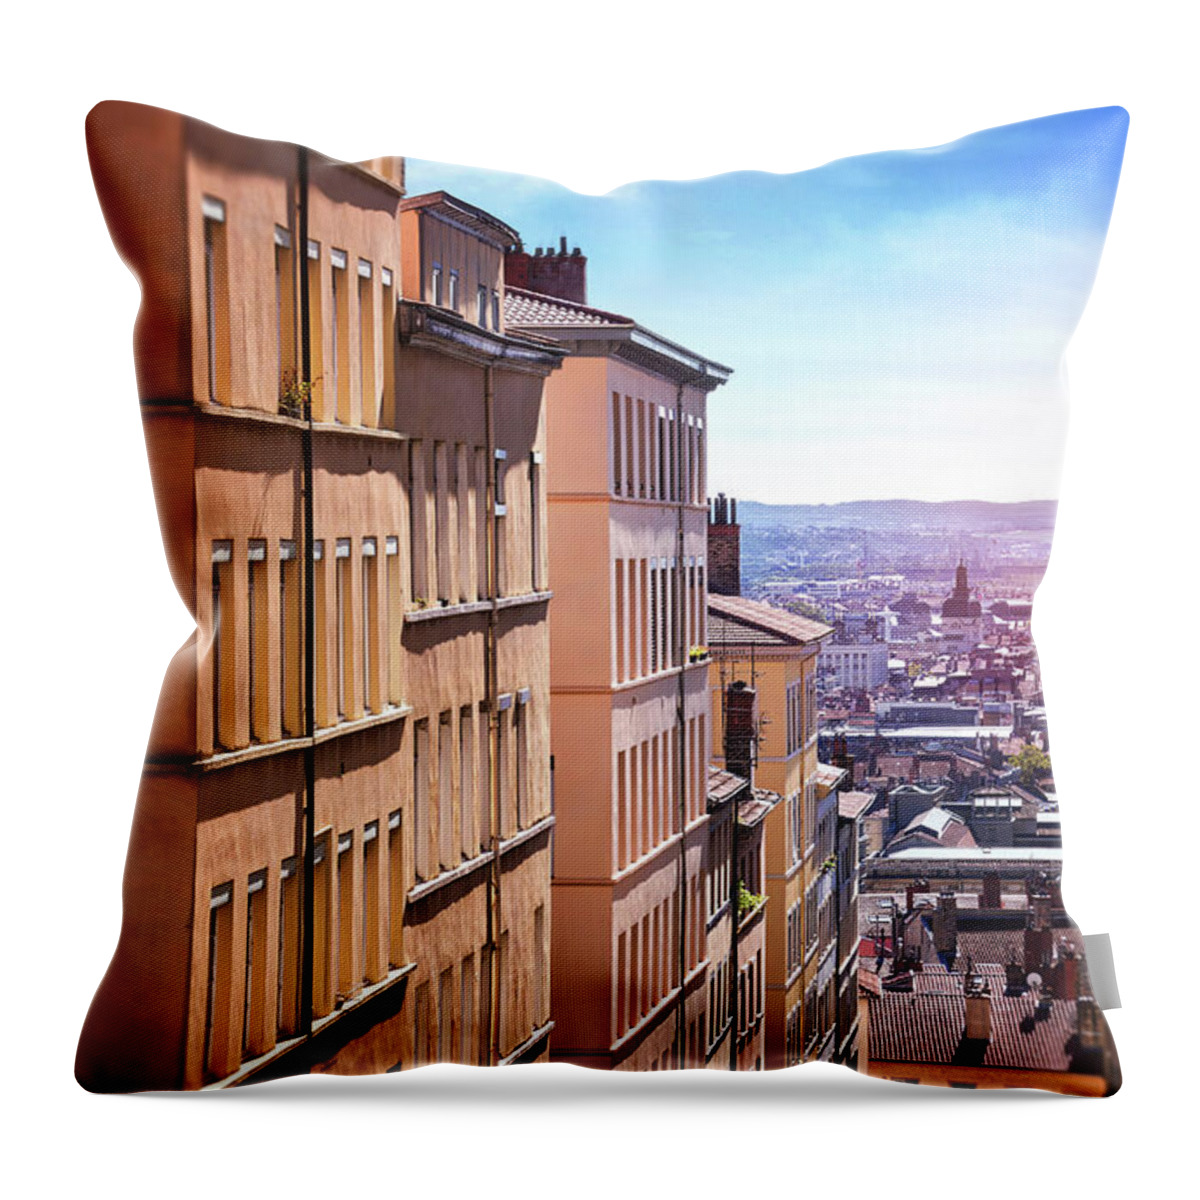 Lyon Throw Pillow featuring the photograph Hills of La Croix Rousse Lyon France by Carol Japp